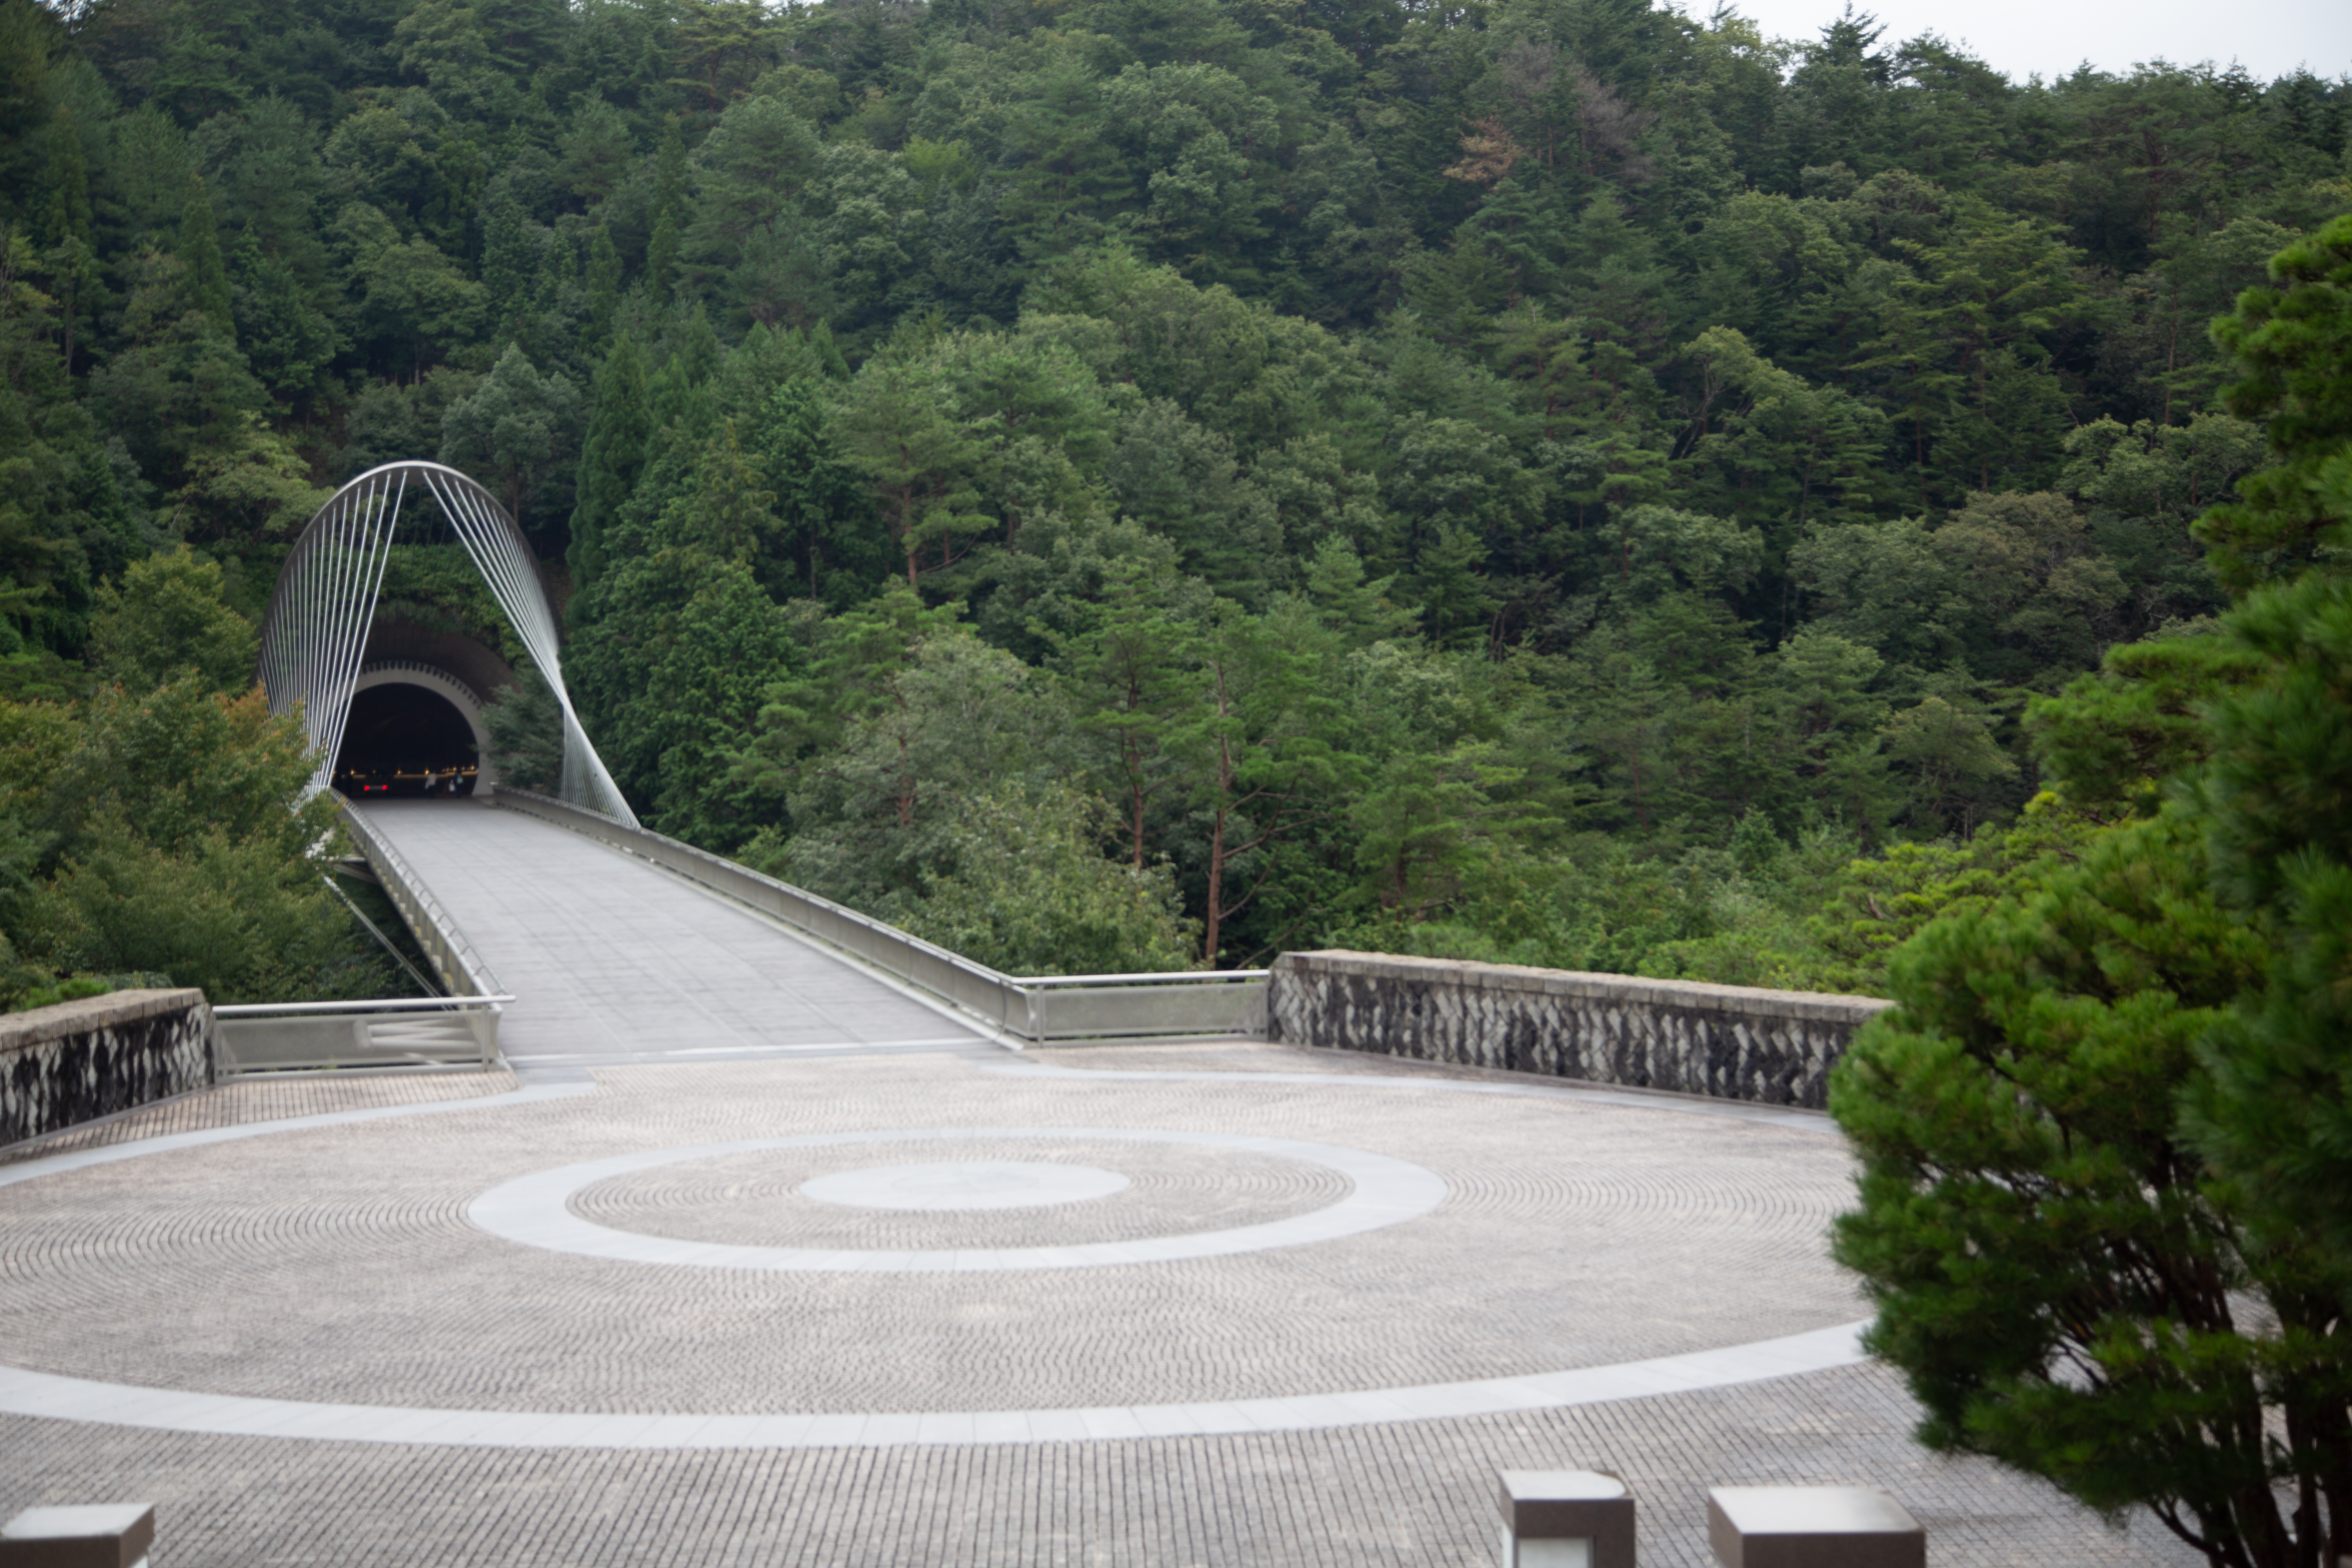 Miho Museum and Bridge